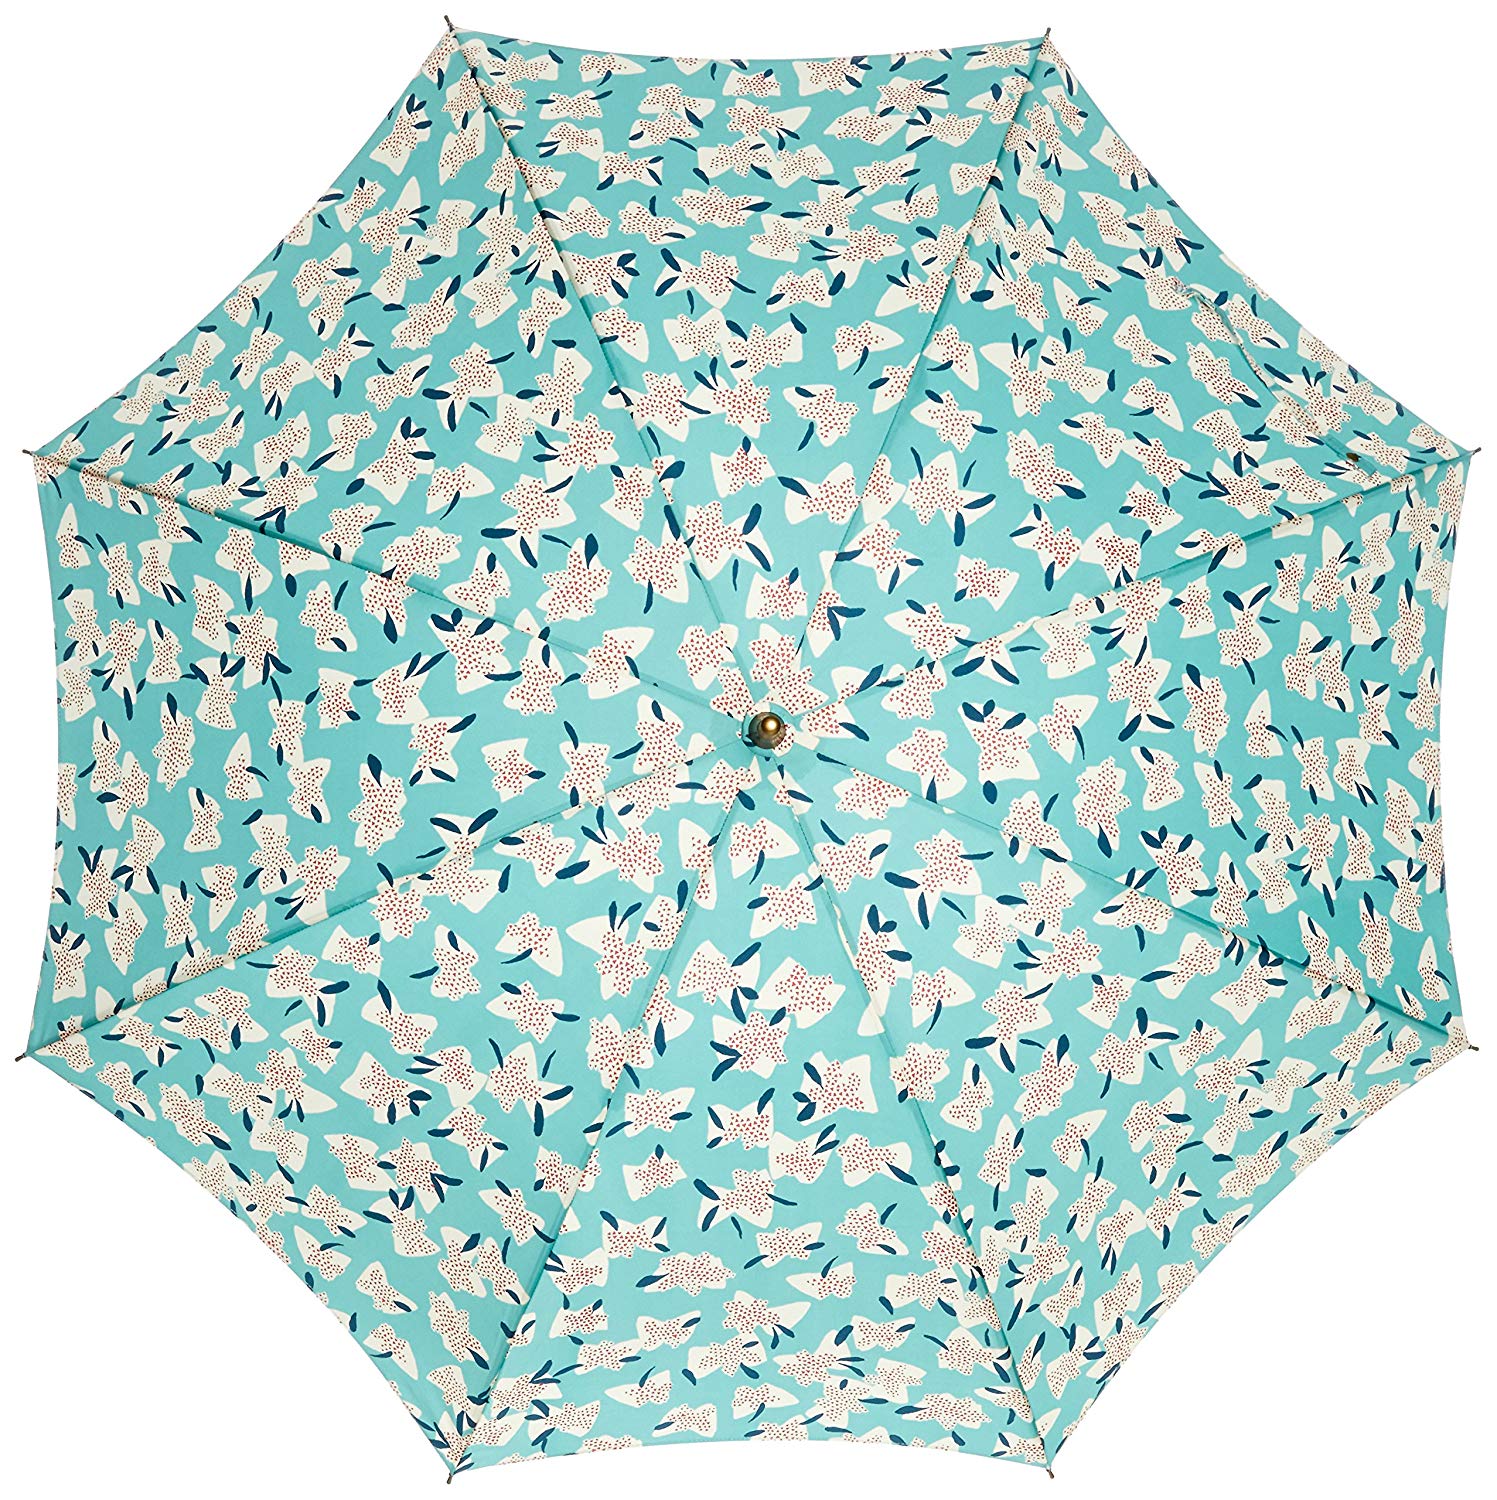 23 Zoll * 8 karat Blumendruck Wasserdicht Winddicht Rahmen Holzschaft Lady Regenschirm